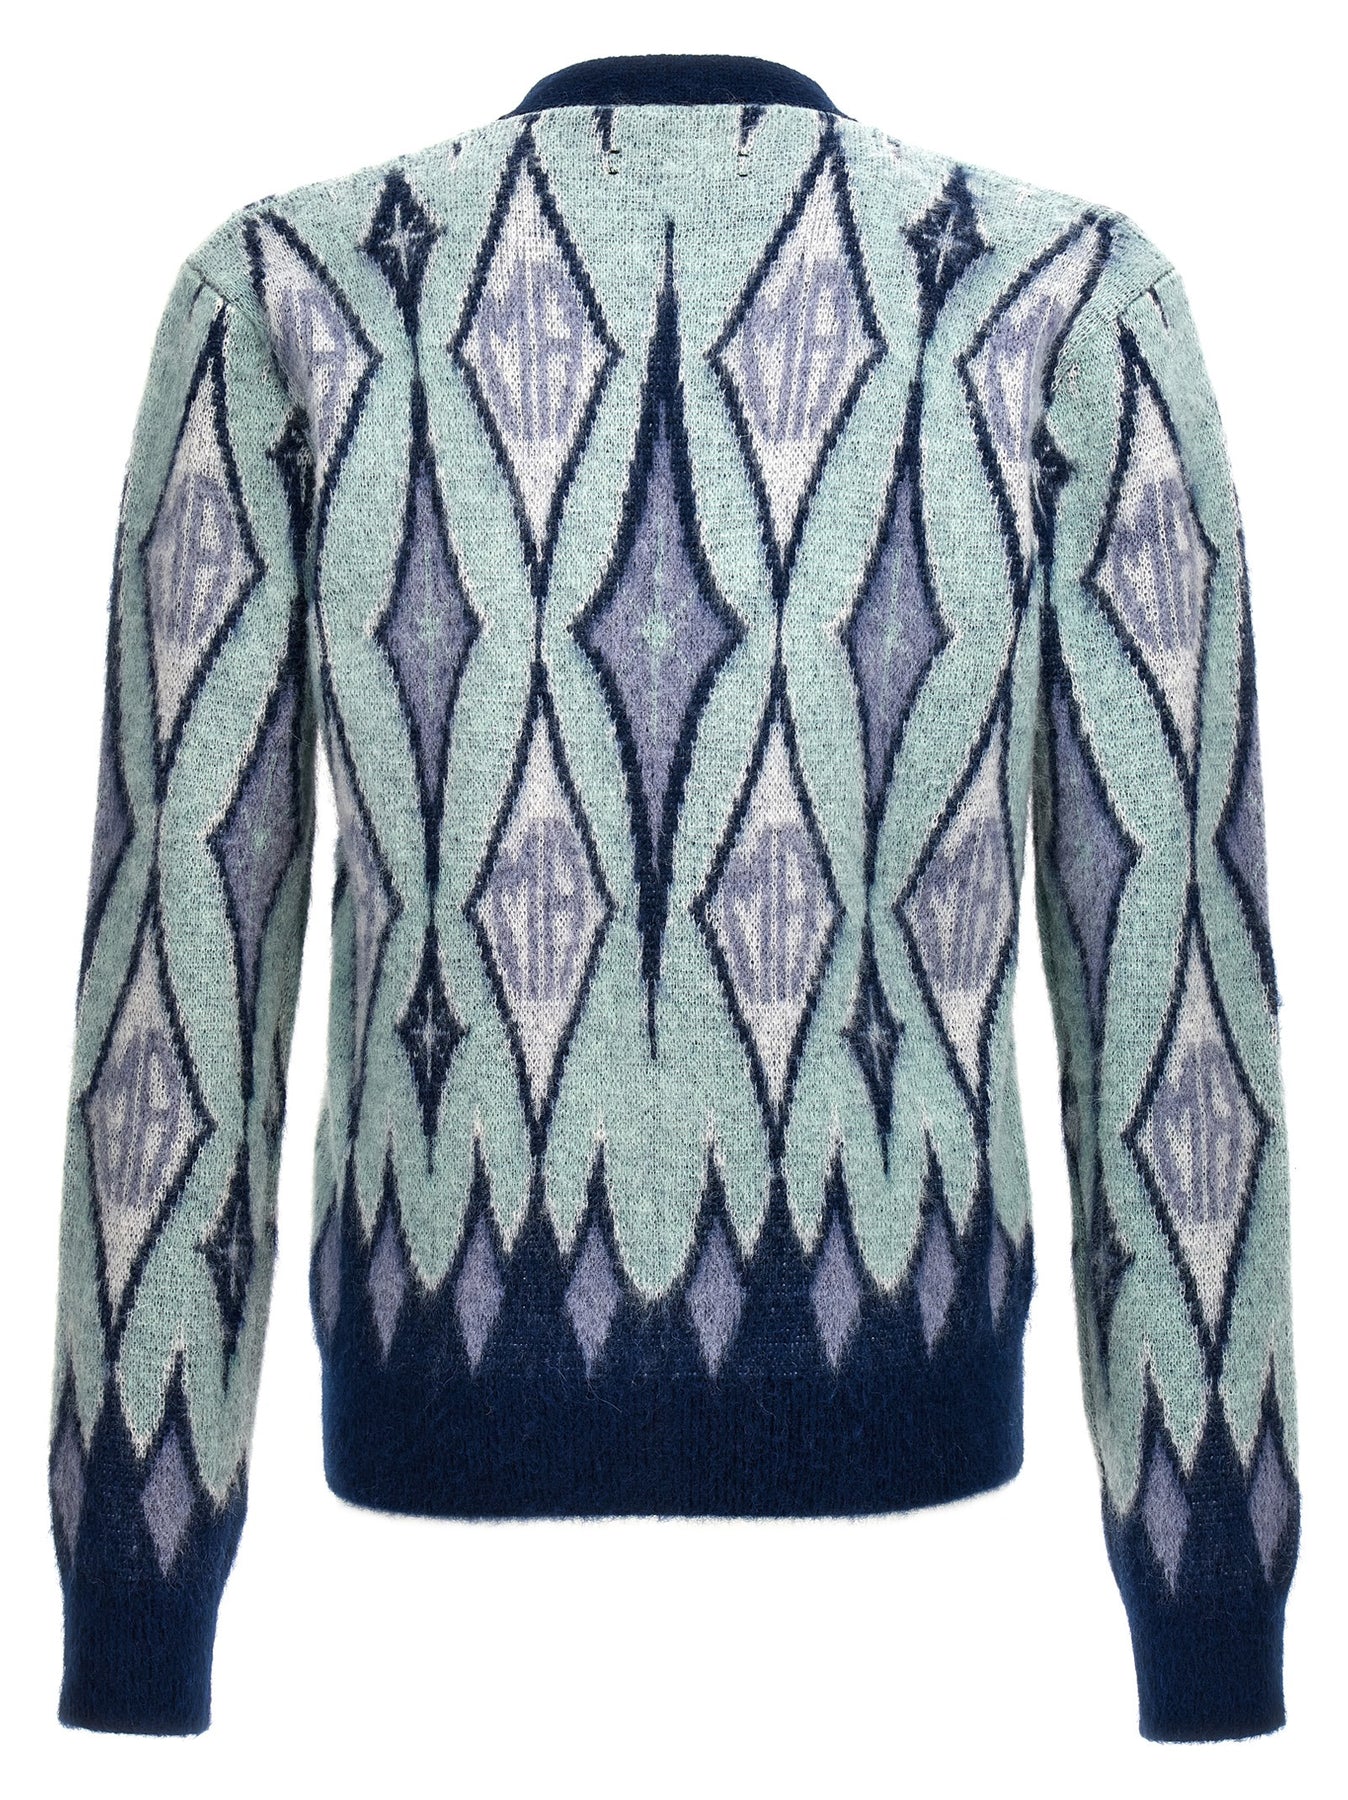 Shop Amiri Argyle Sweater, Cardigans Light Blue